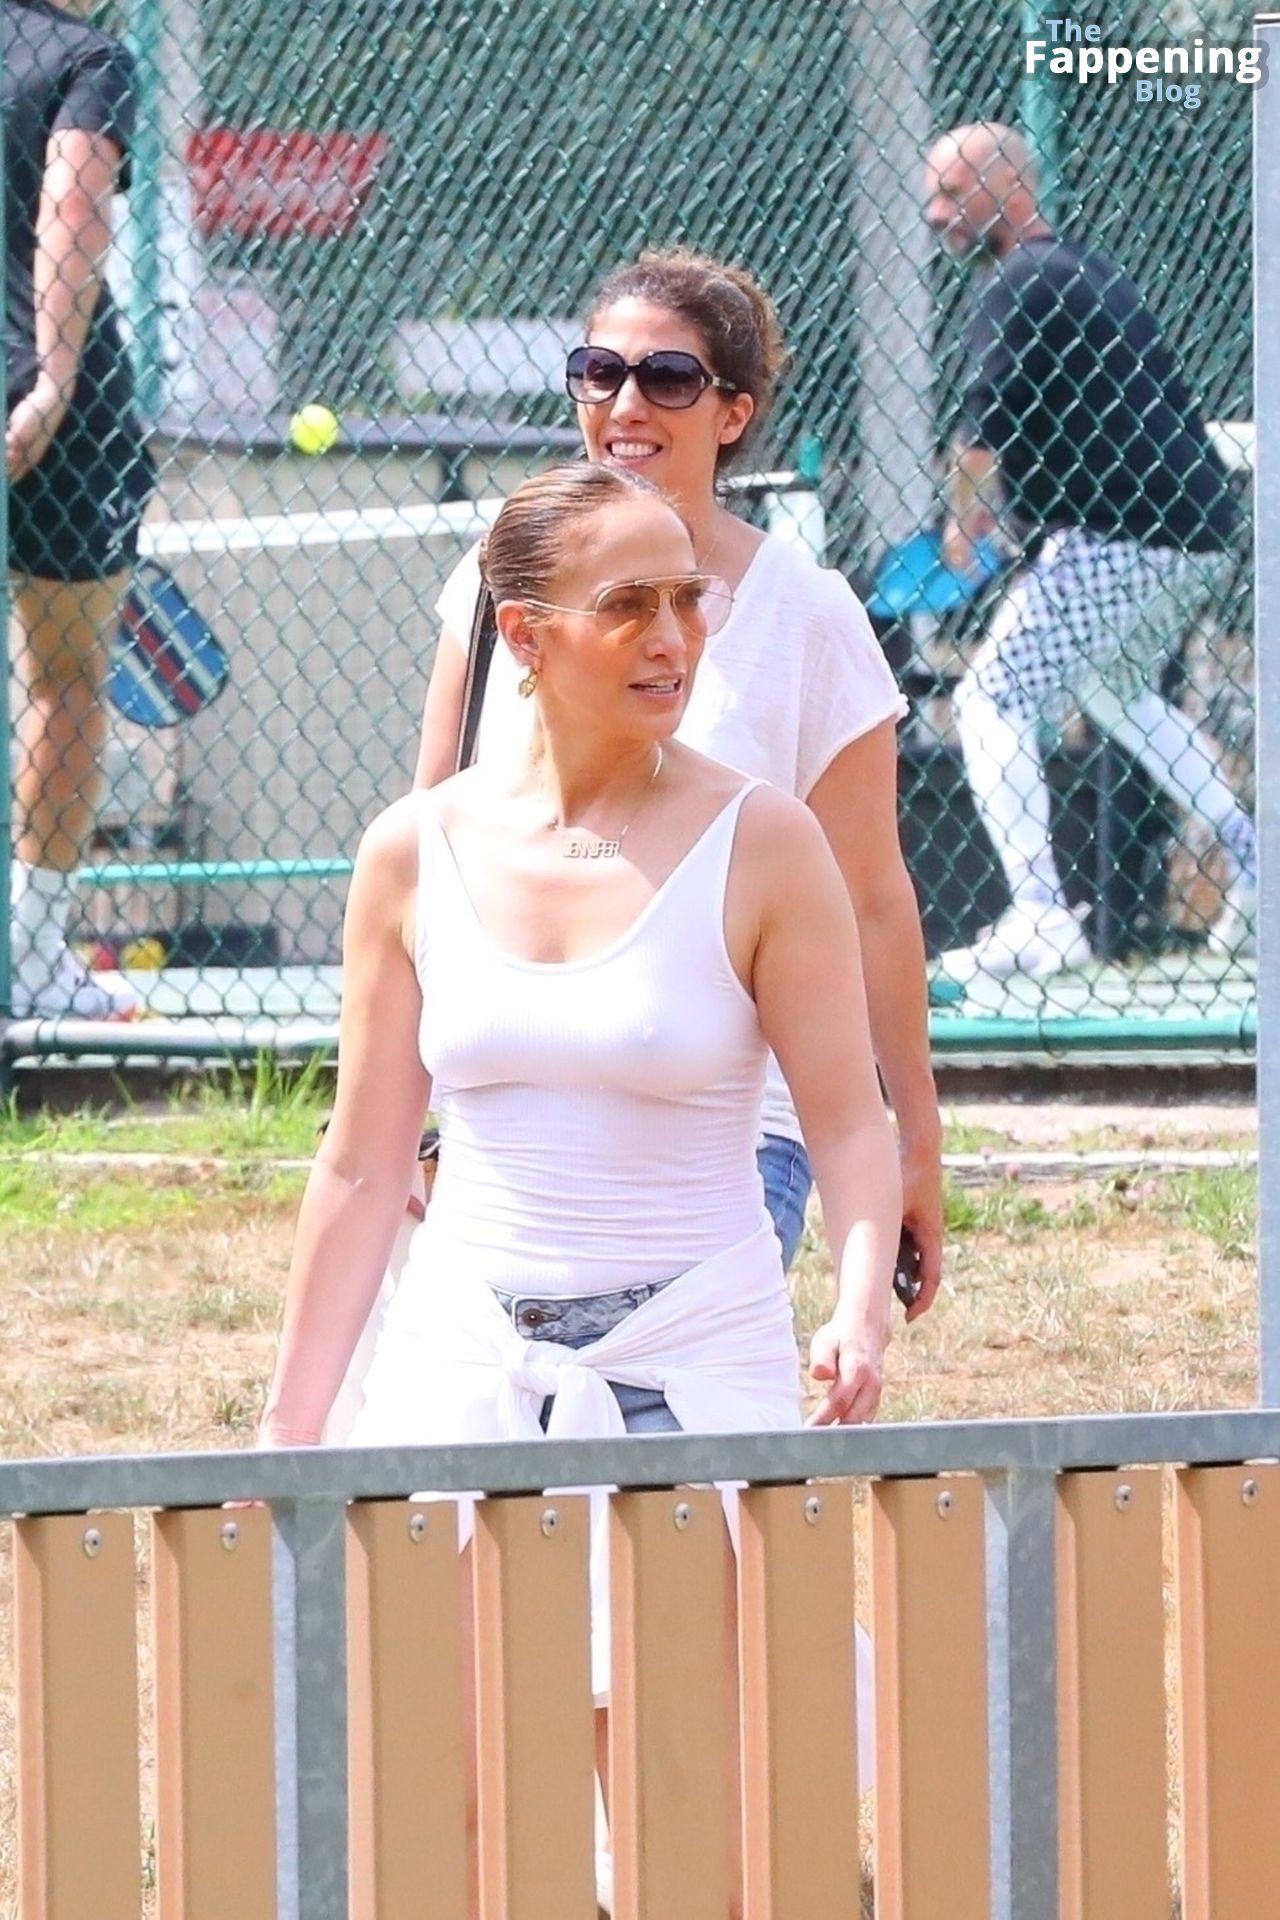 Jennifer-Lopez-Sexy-The-Fappening-Blog-9-1.jpg